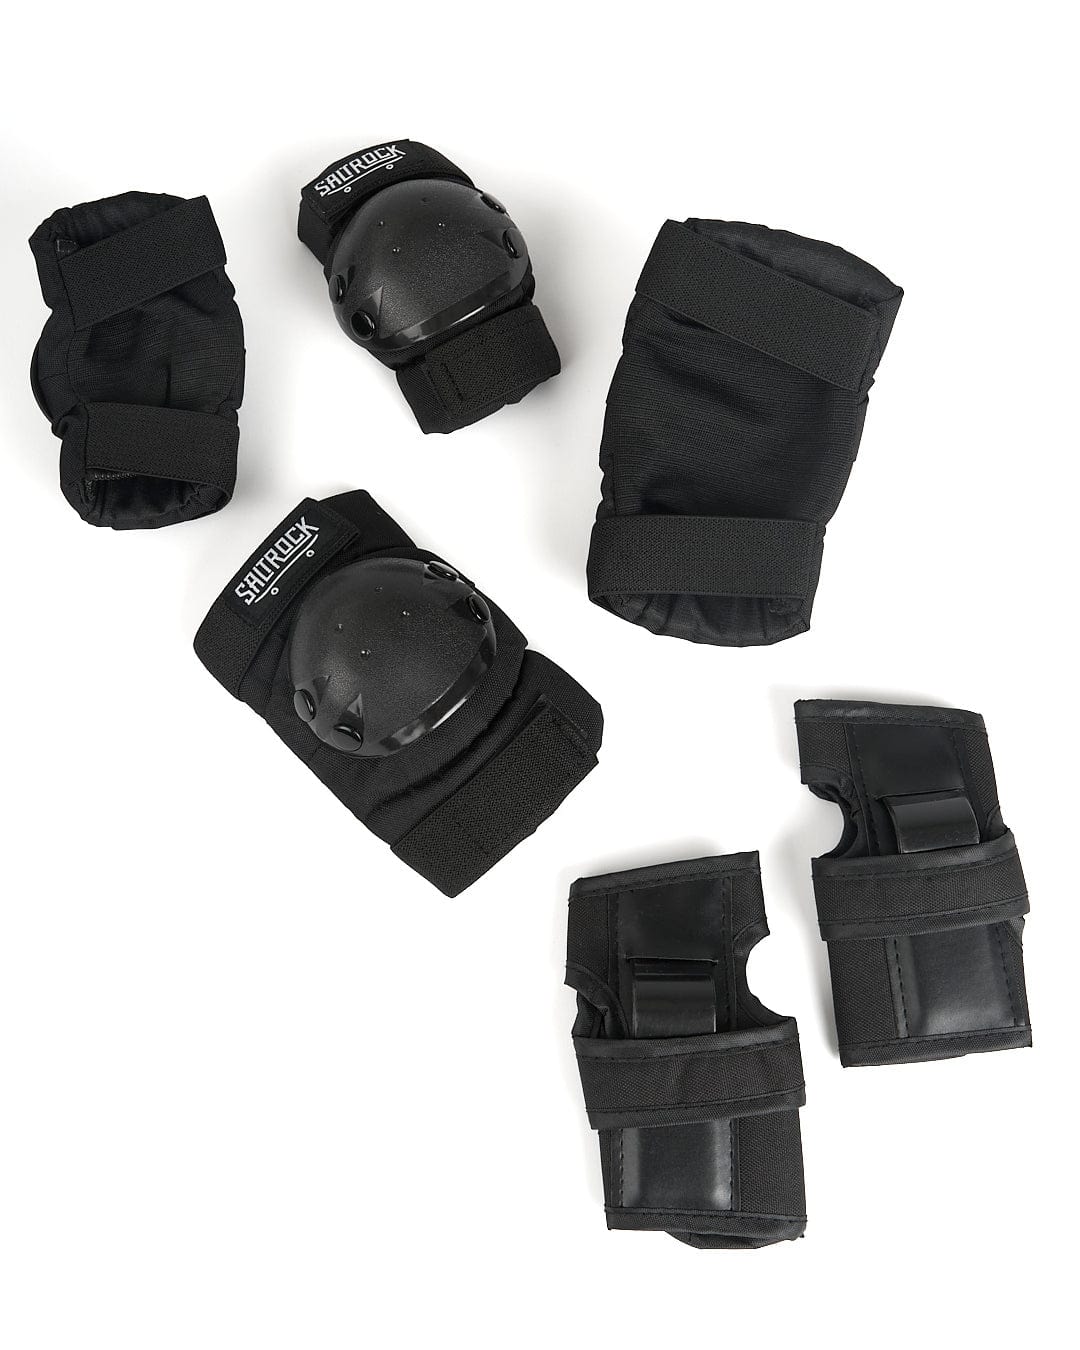 A set of Hardskate - Skate Pads - Black knee pads, elbow pads and knee pads by Saltrock.